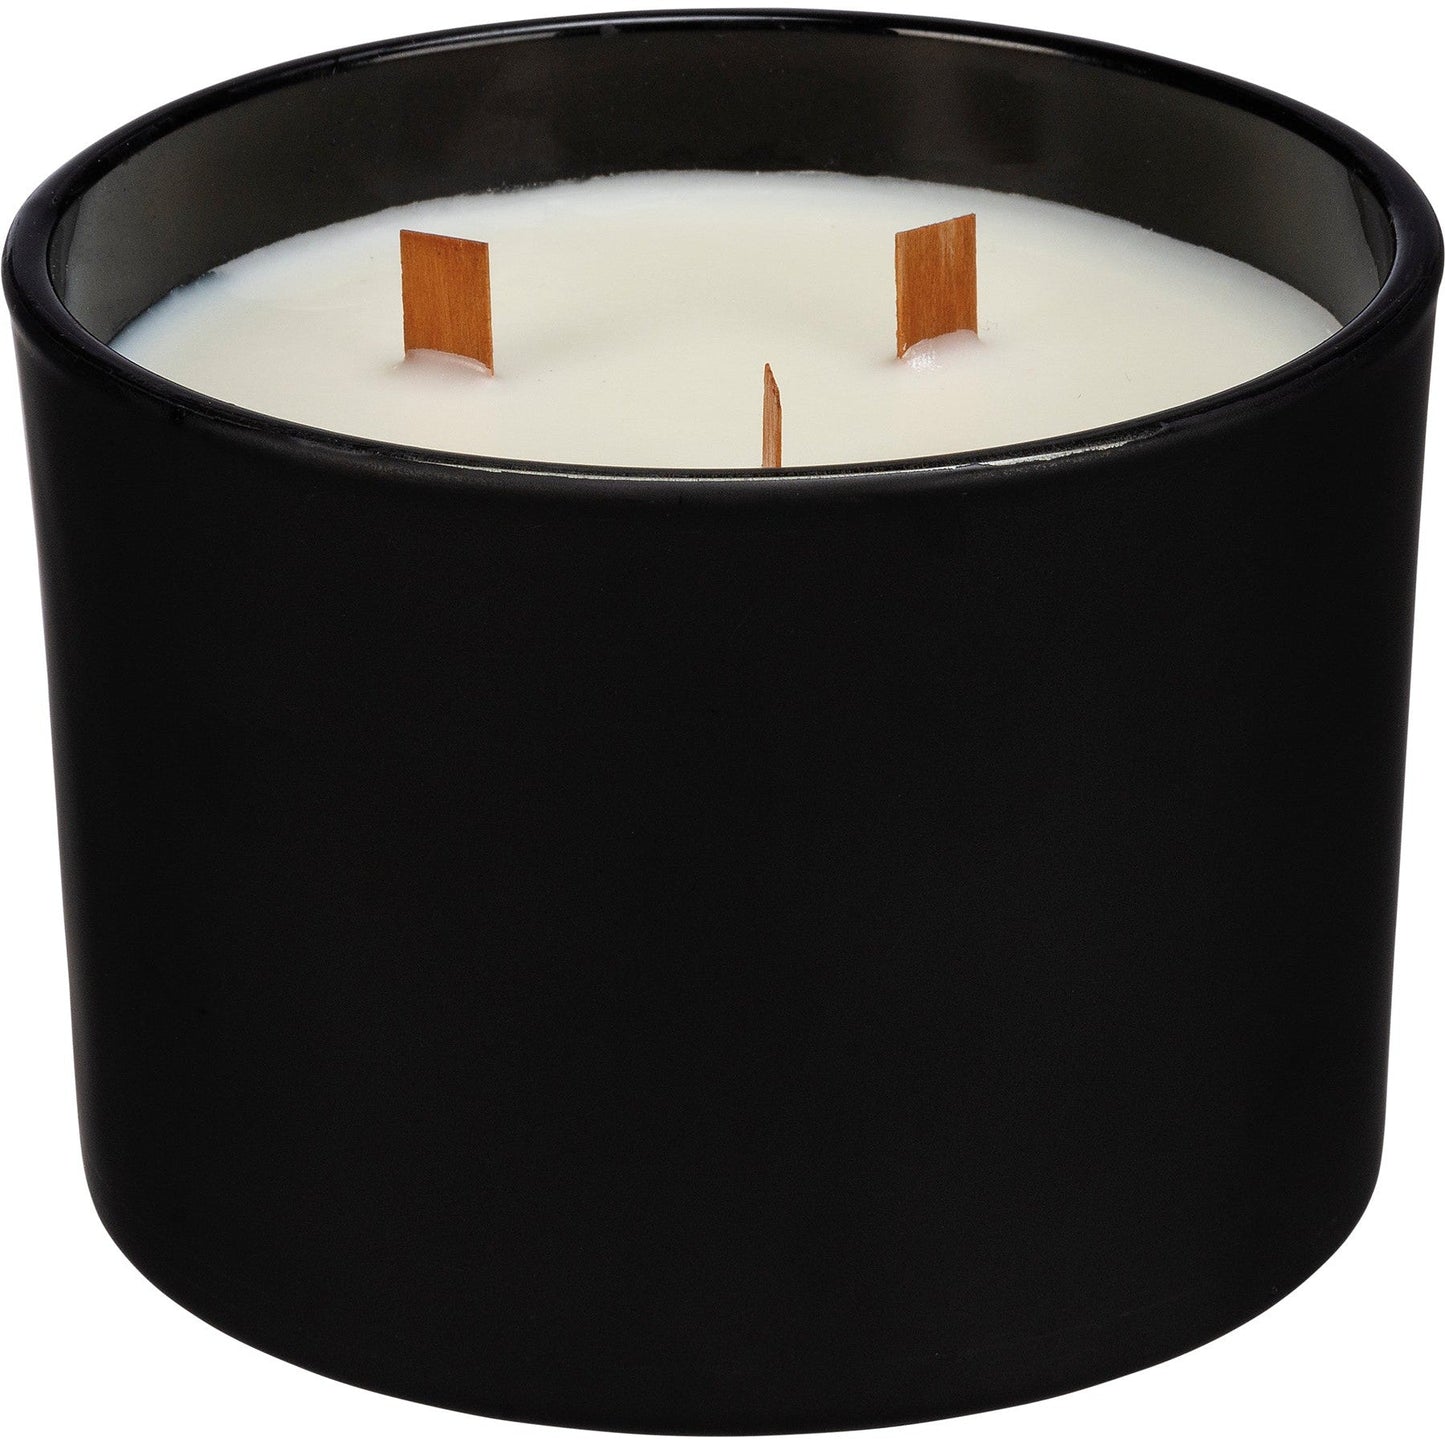 Brother Jar Candle | Matte Black Glass | 26hrs Burn Time